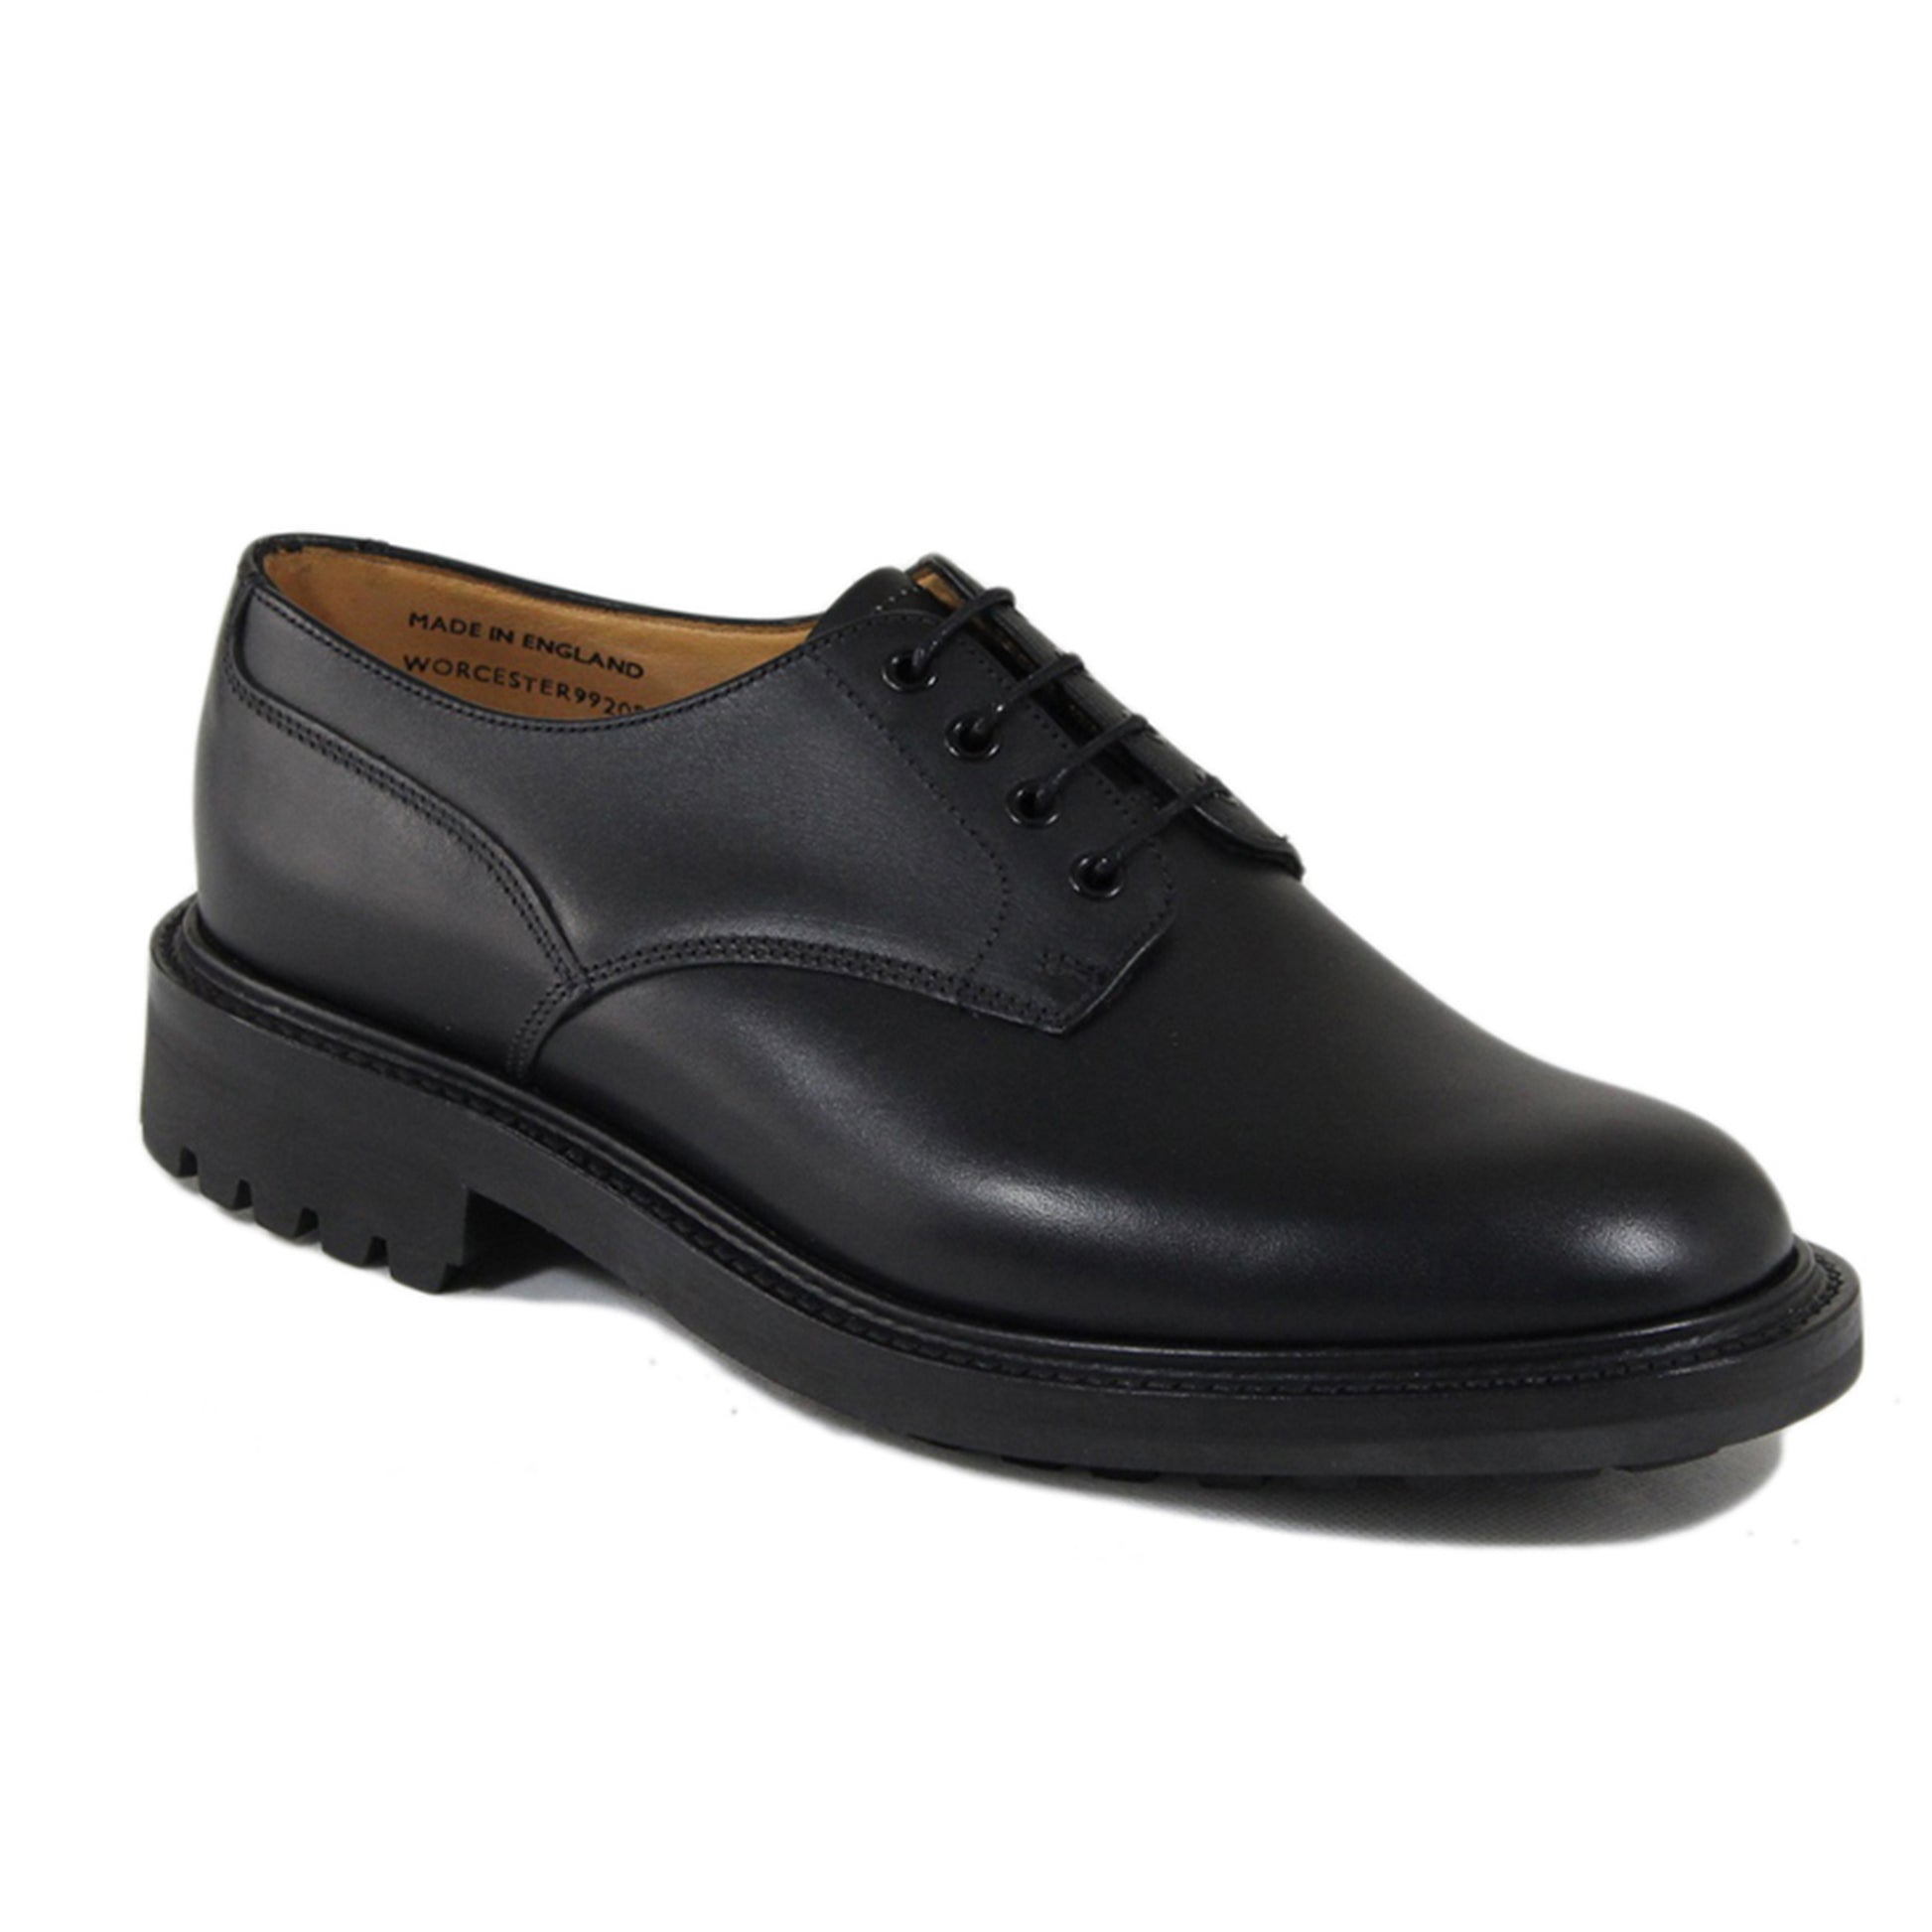 Sanders Worcester Gibson Derby Shoe Leather Footwear in Black Angle